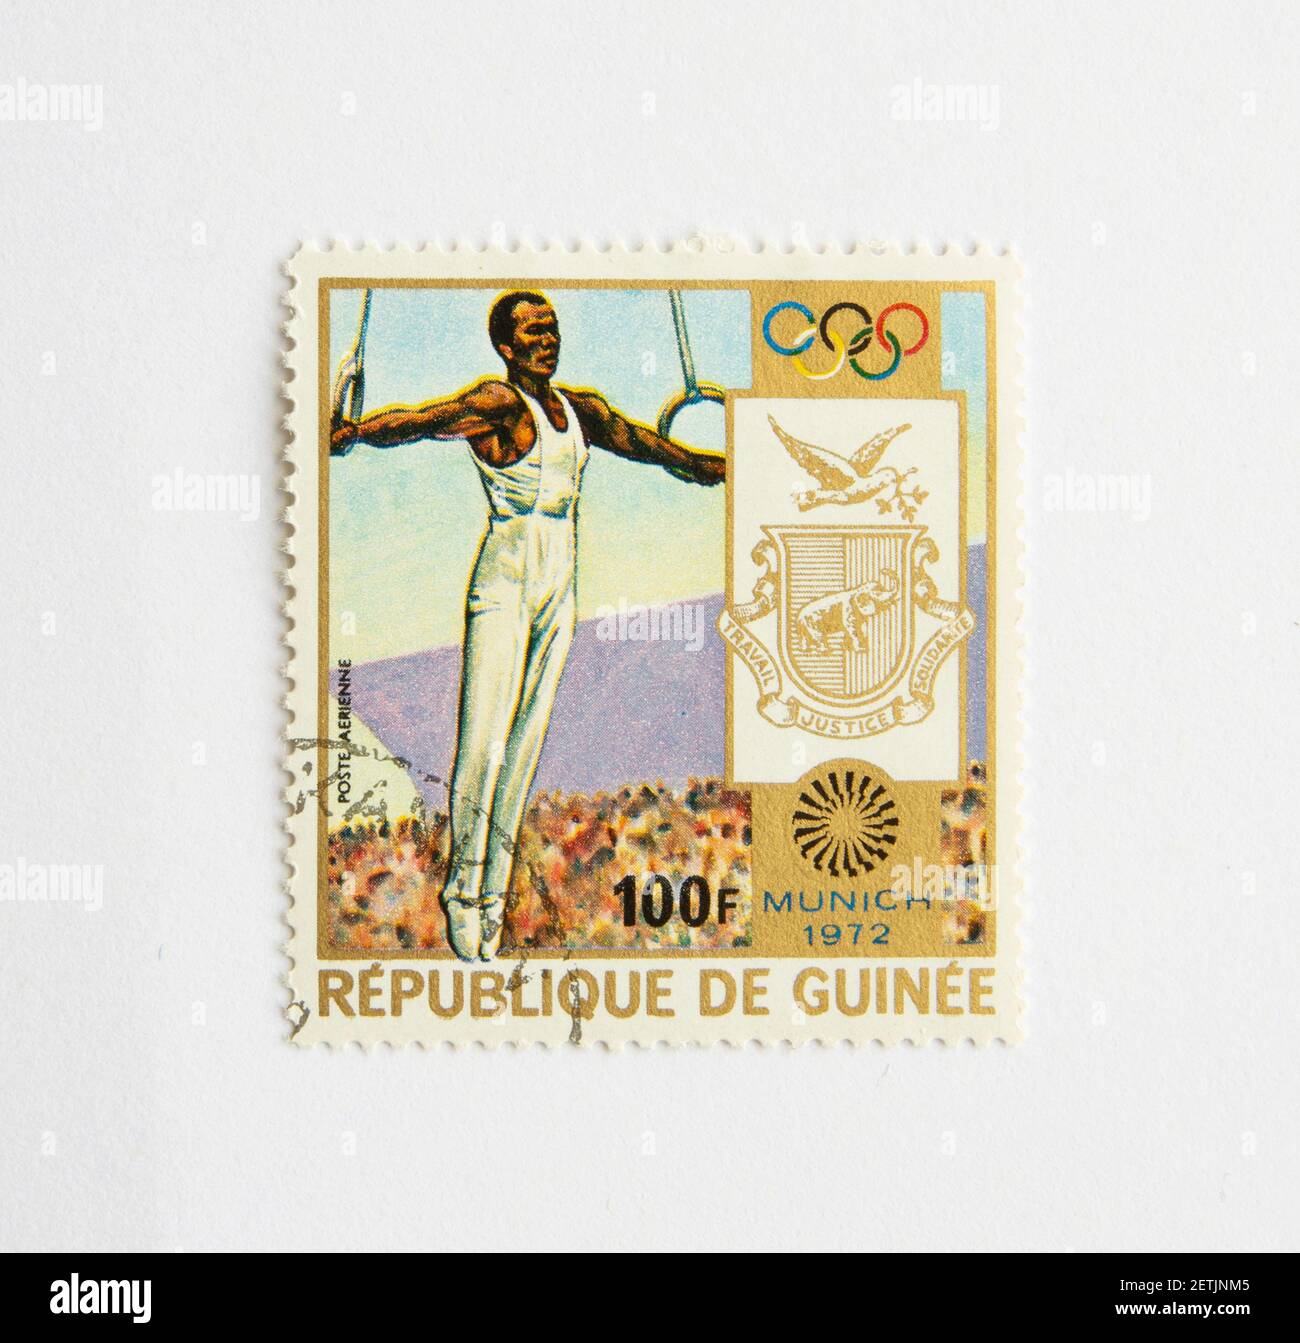 01.03.2021 Istanbul Turkey. Guinea Republic Postage Stamp. circa 1972. munich olympic games. Gymnastics Stock Photo